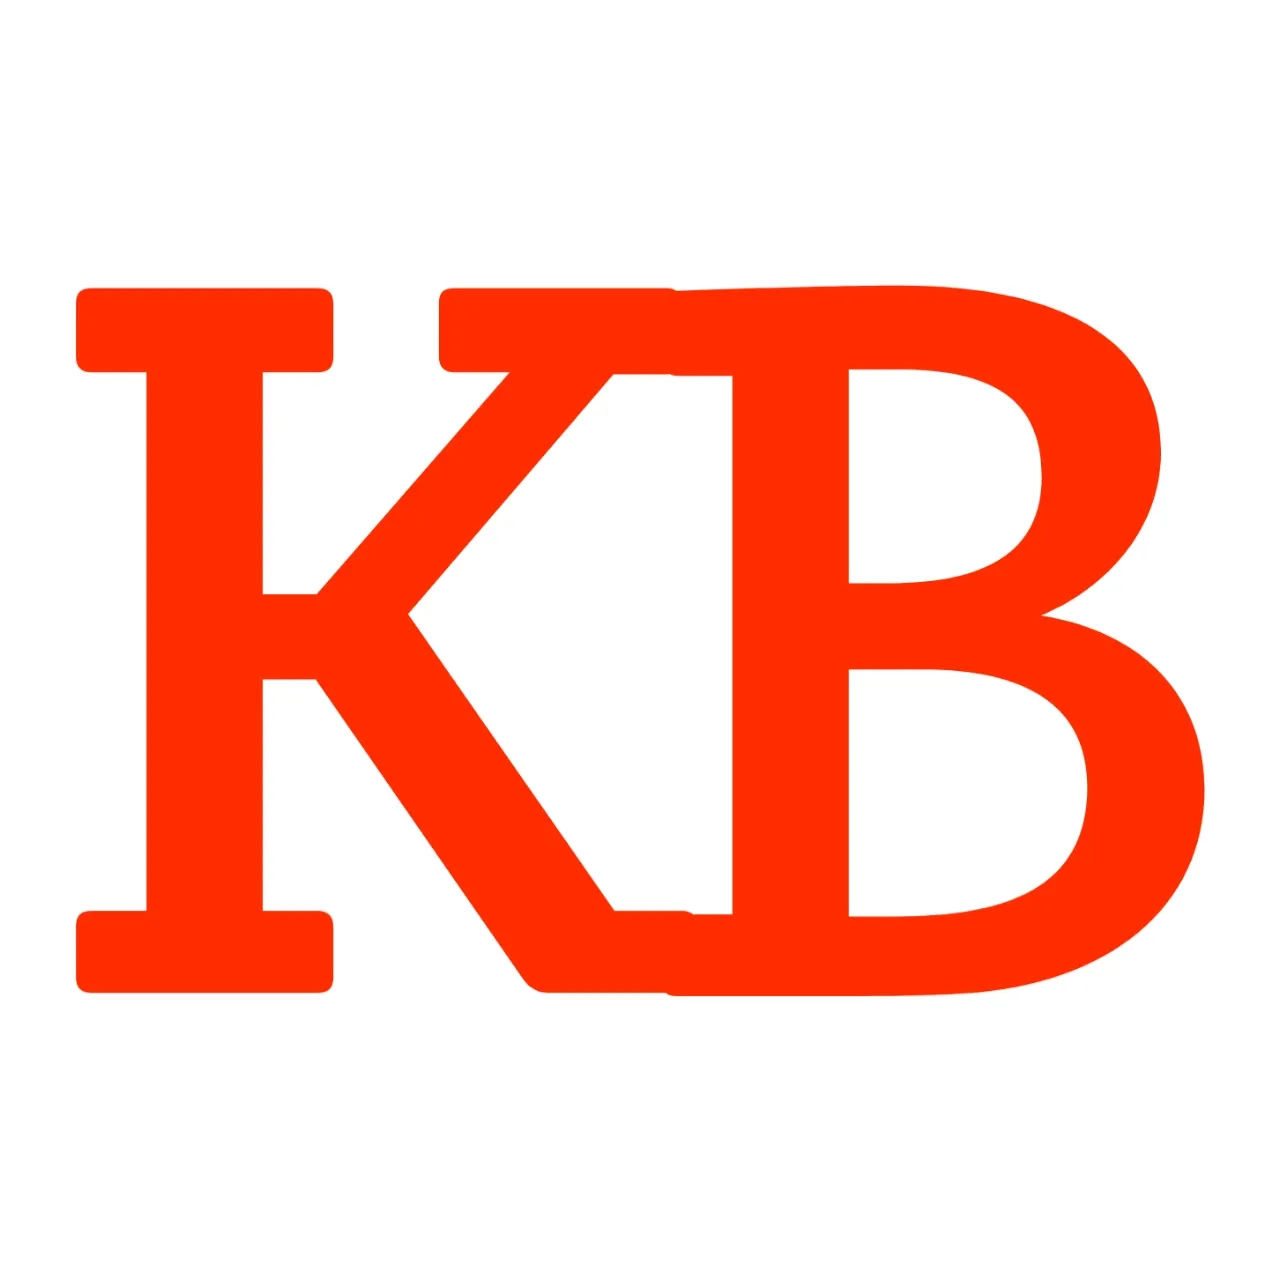 khab.in official logo